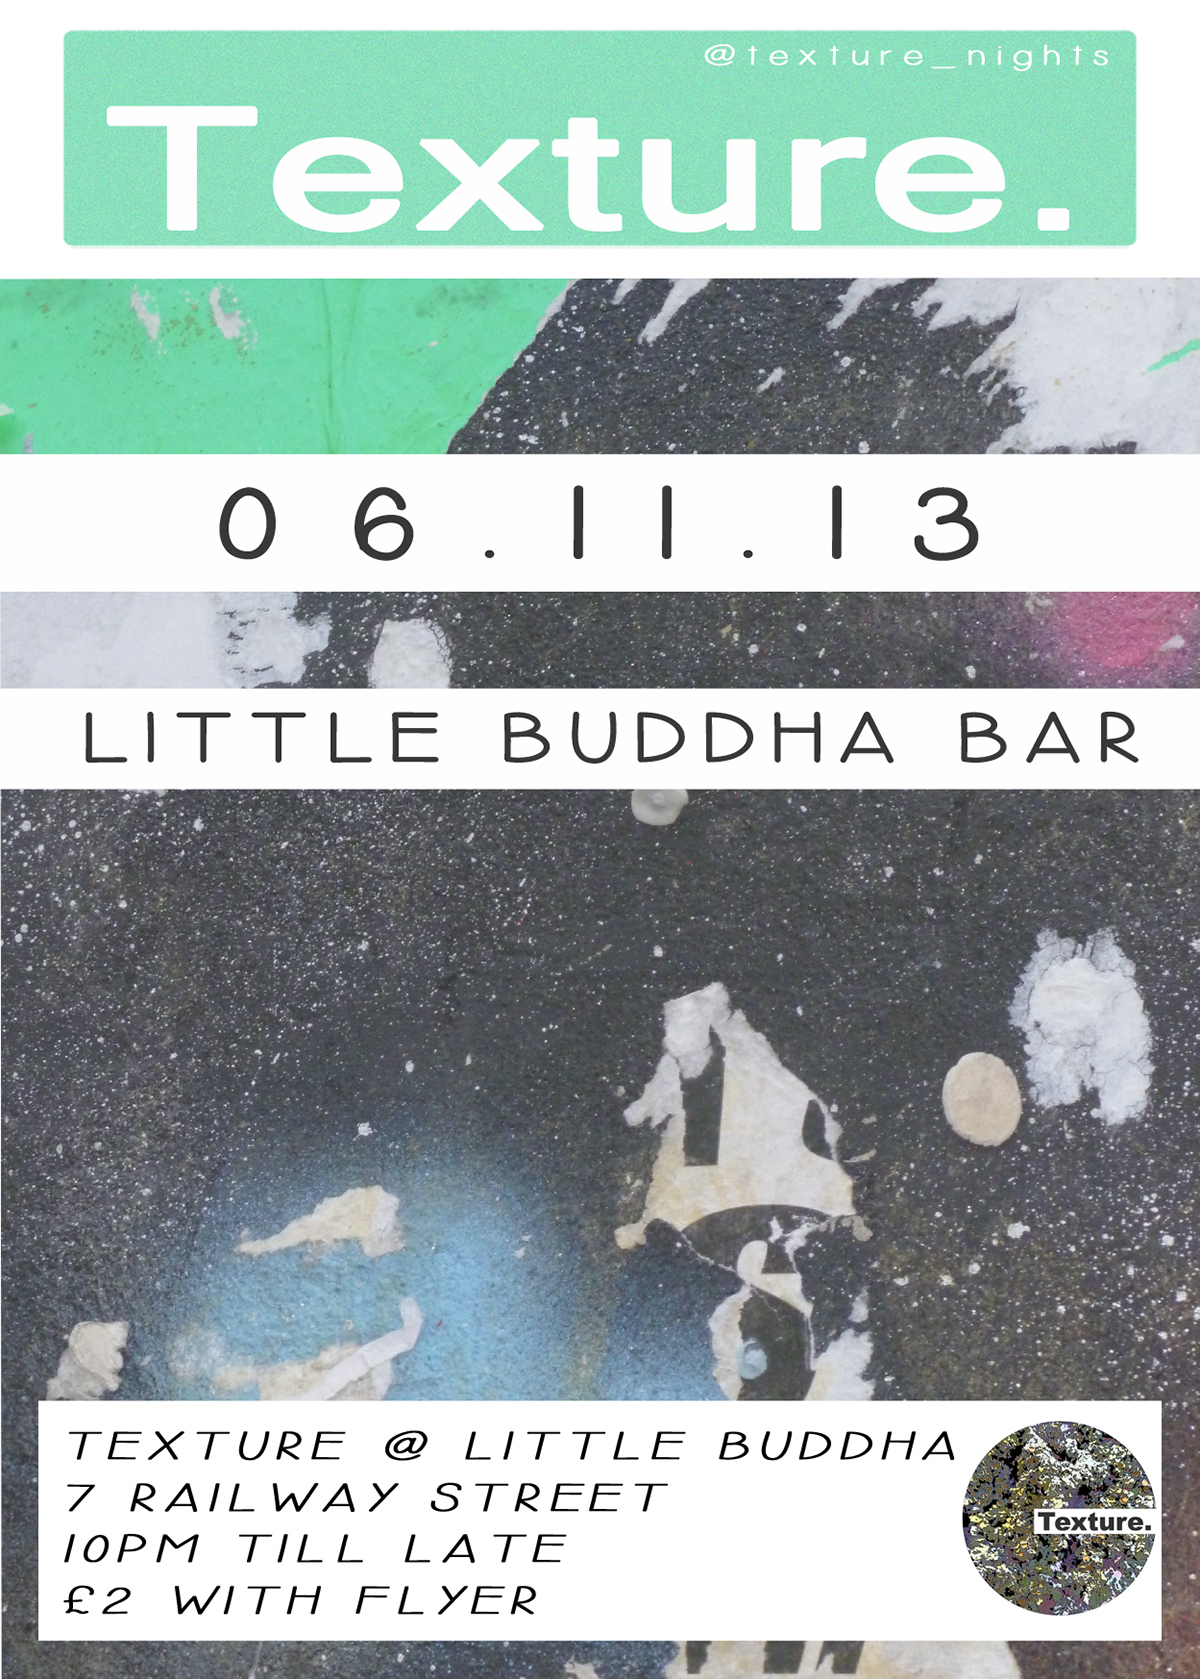 Adobe Portfolio Idea3 texture designs Little Buddha Bar Sotano York techno house